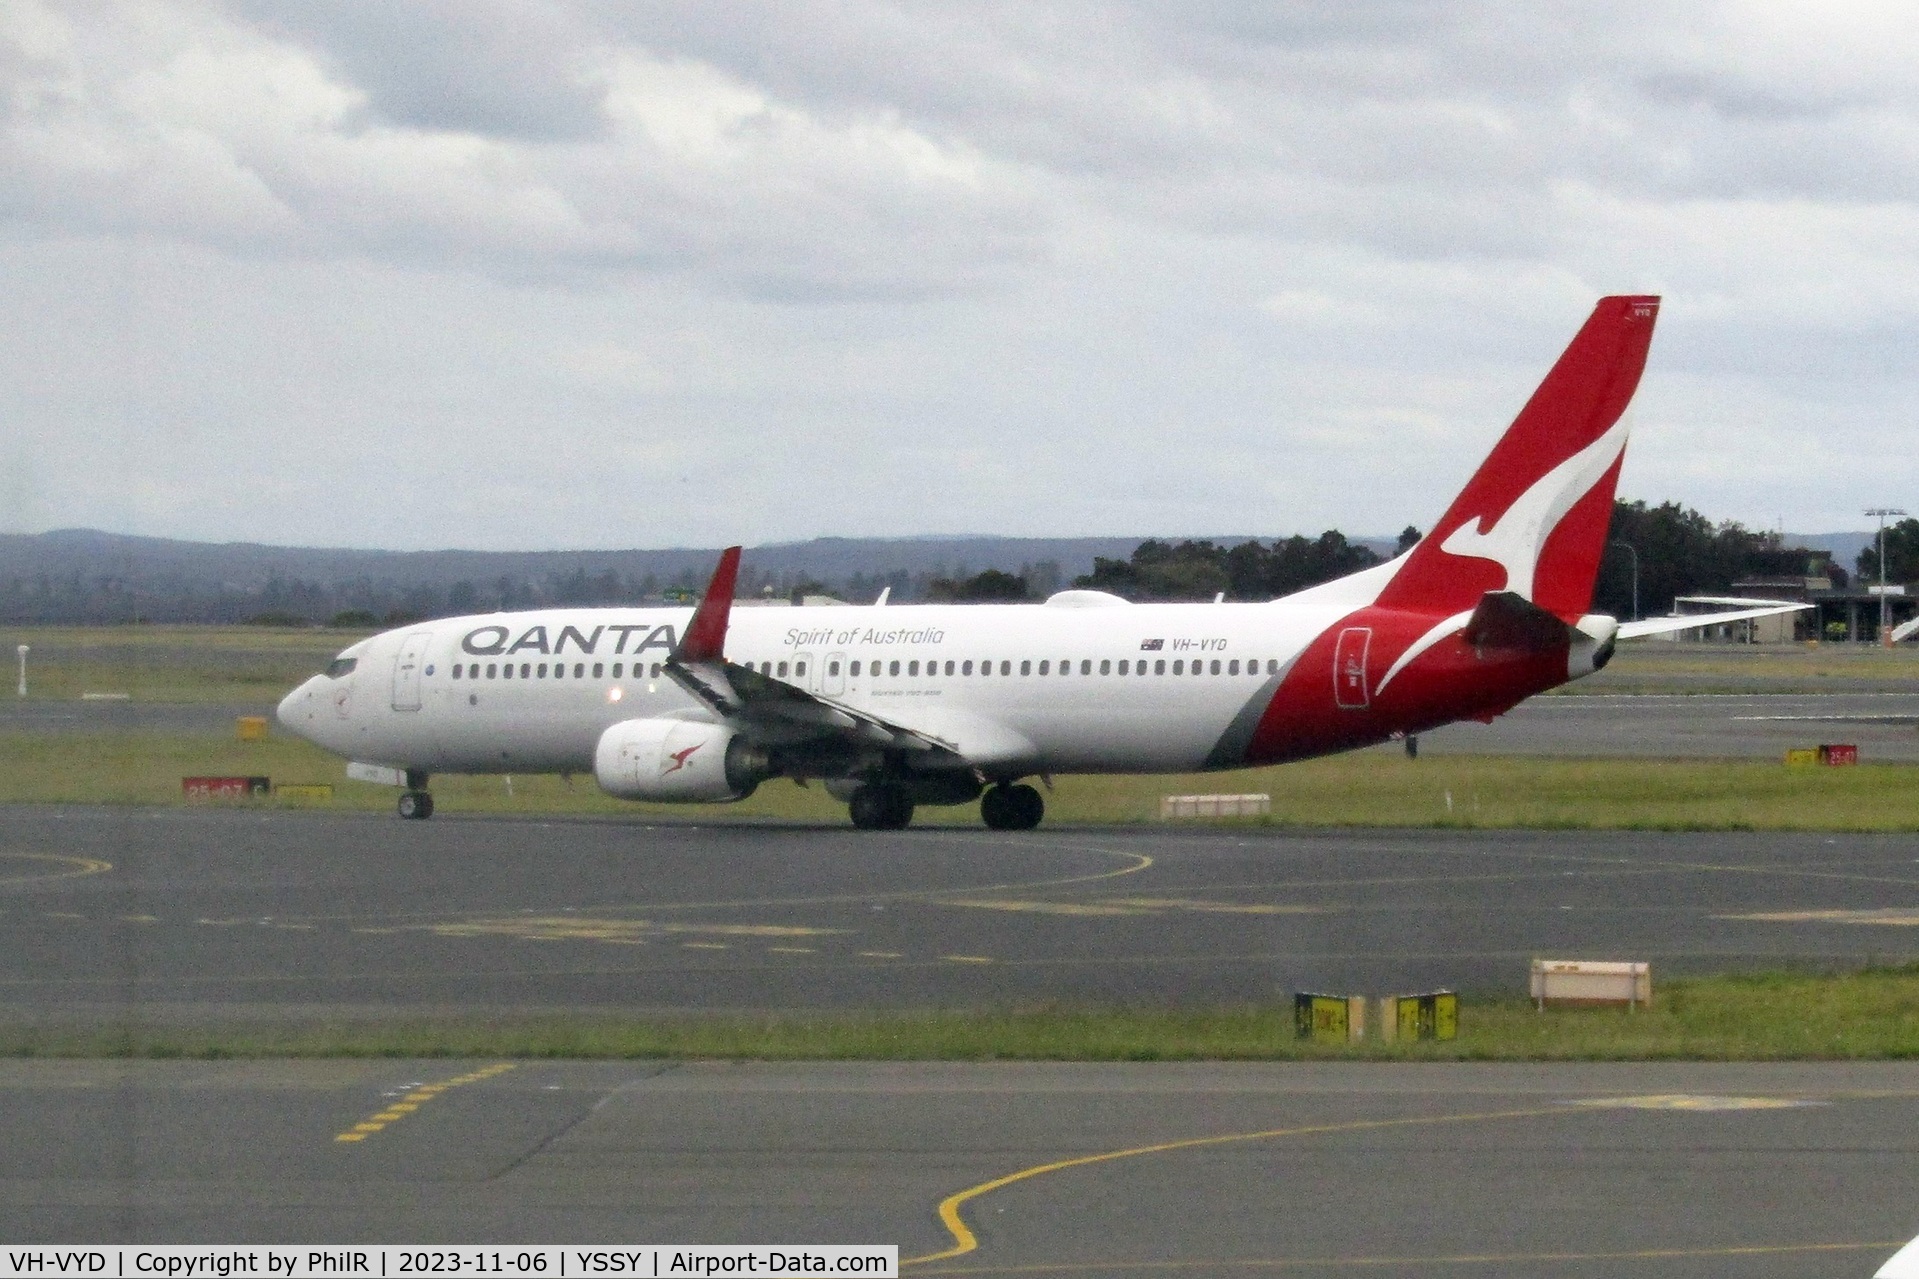 VH-VYD, 2005 Boeing 737-838 C/N 33992, VH-VYD 2005 Boeing 737-800 Qantas Sydney